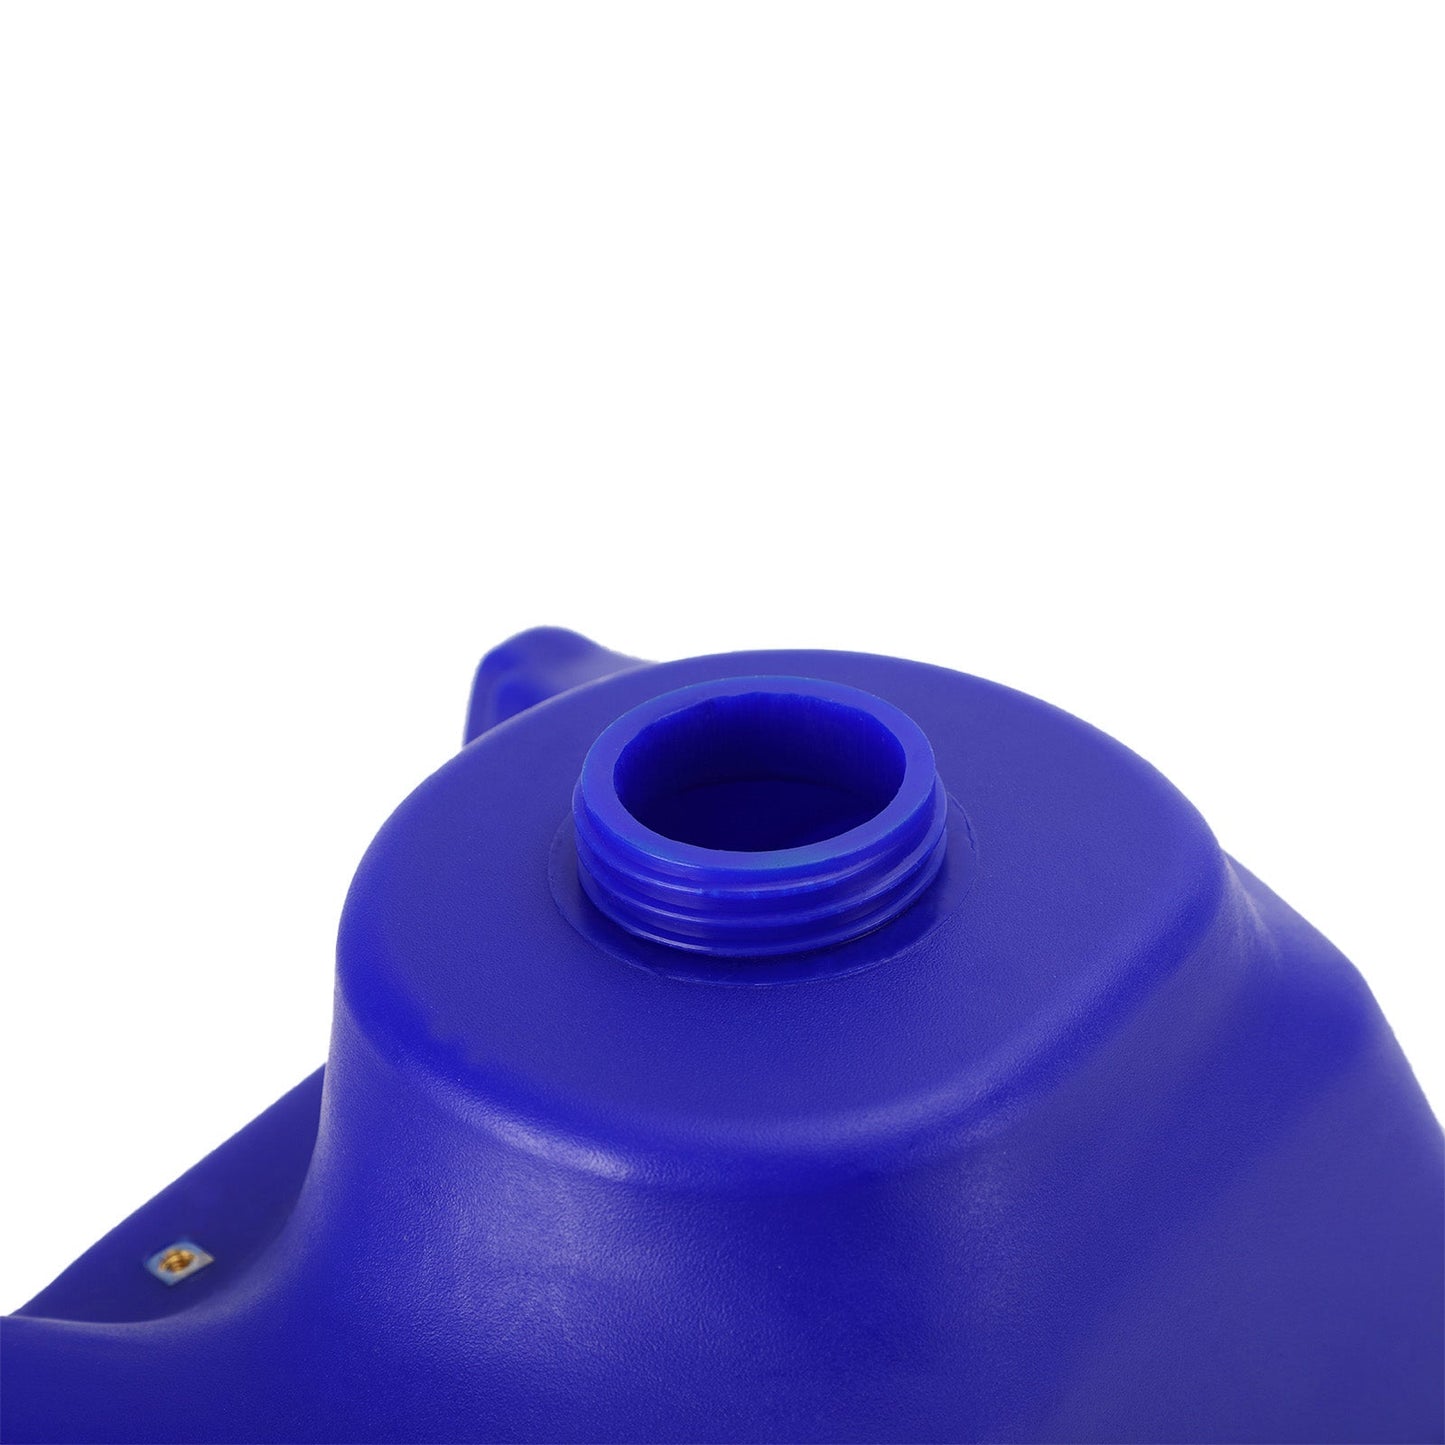 Plastic 5.6 Gal Blue Fuel Gas Tank For Yamaha Banshee 350 YFZ350 YFZ 350 87-06